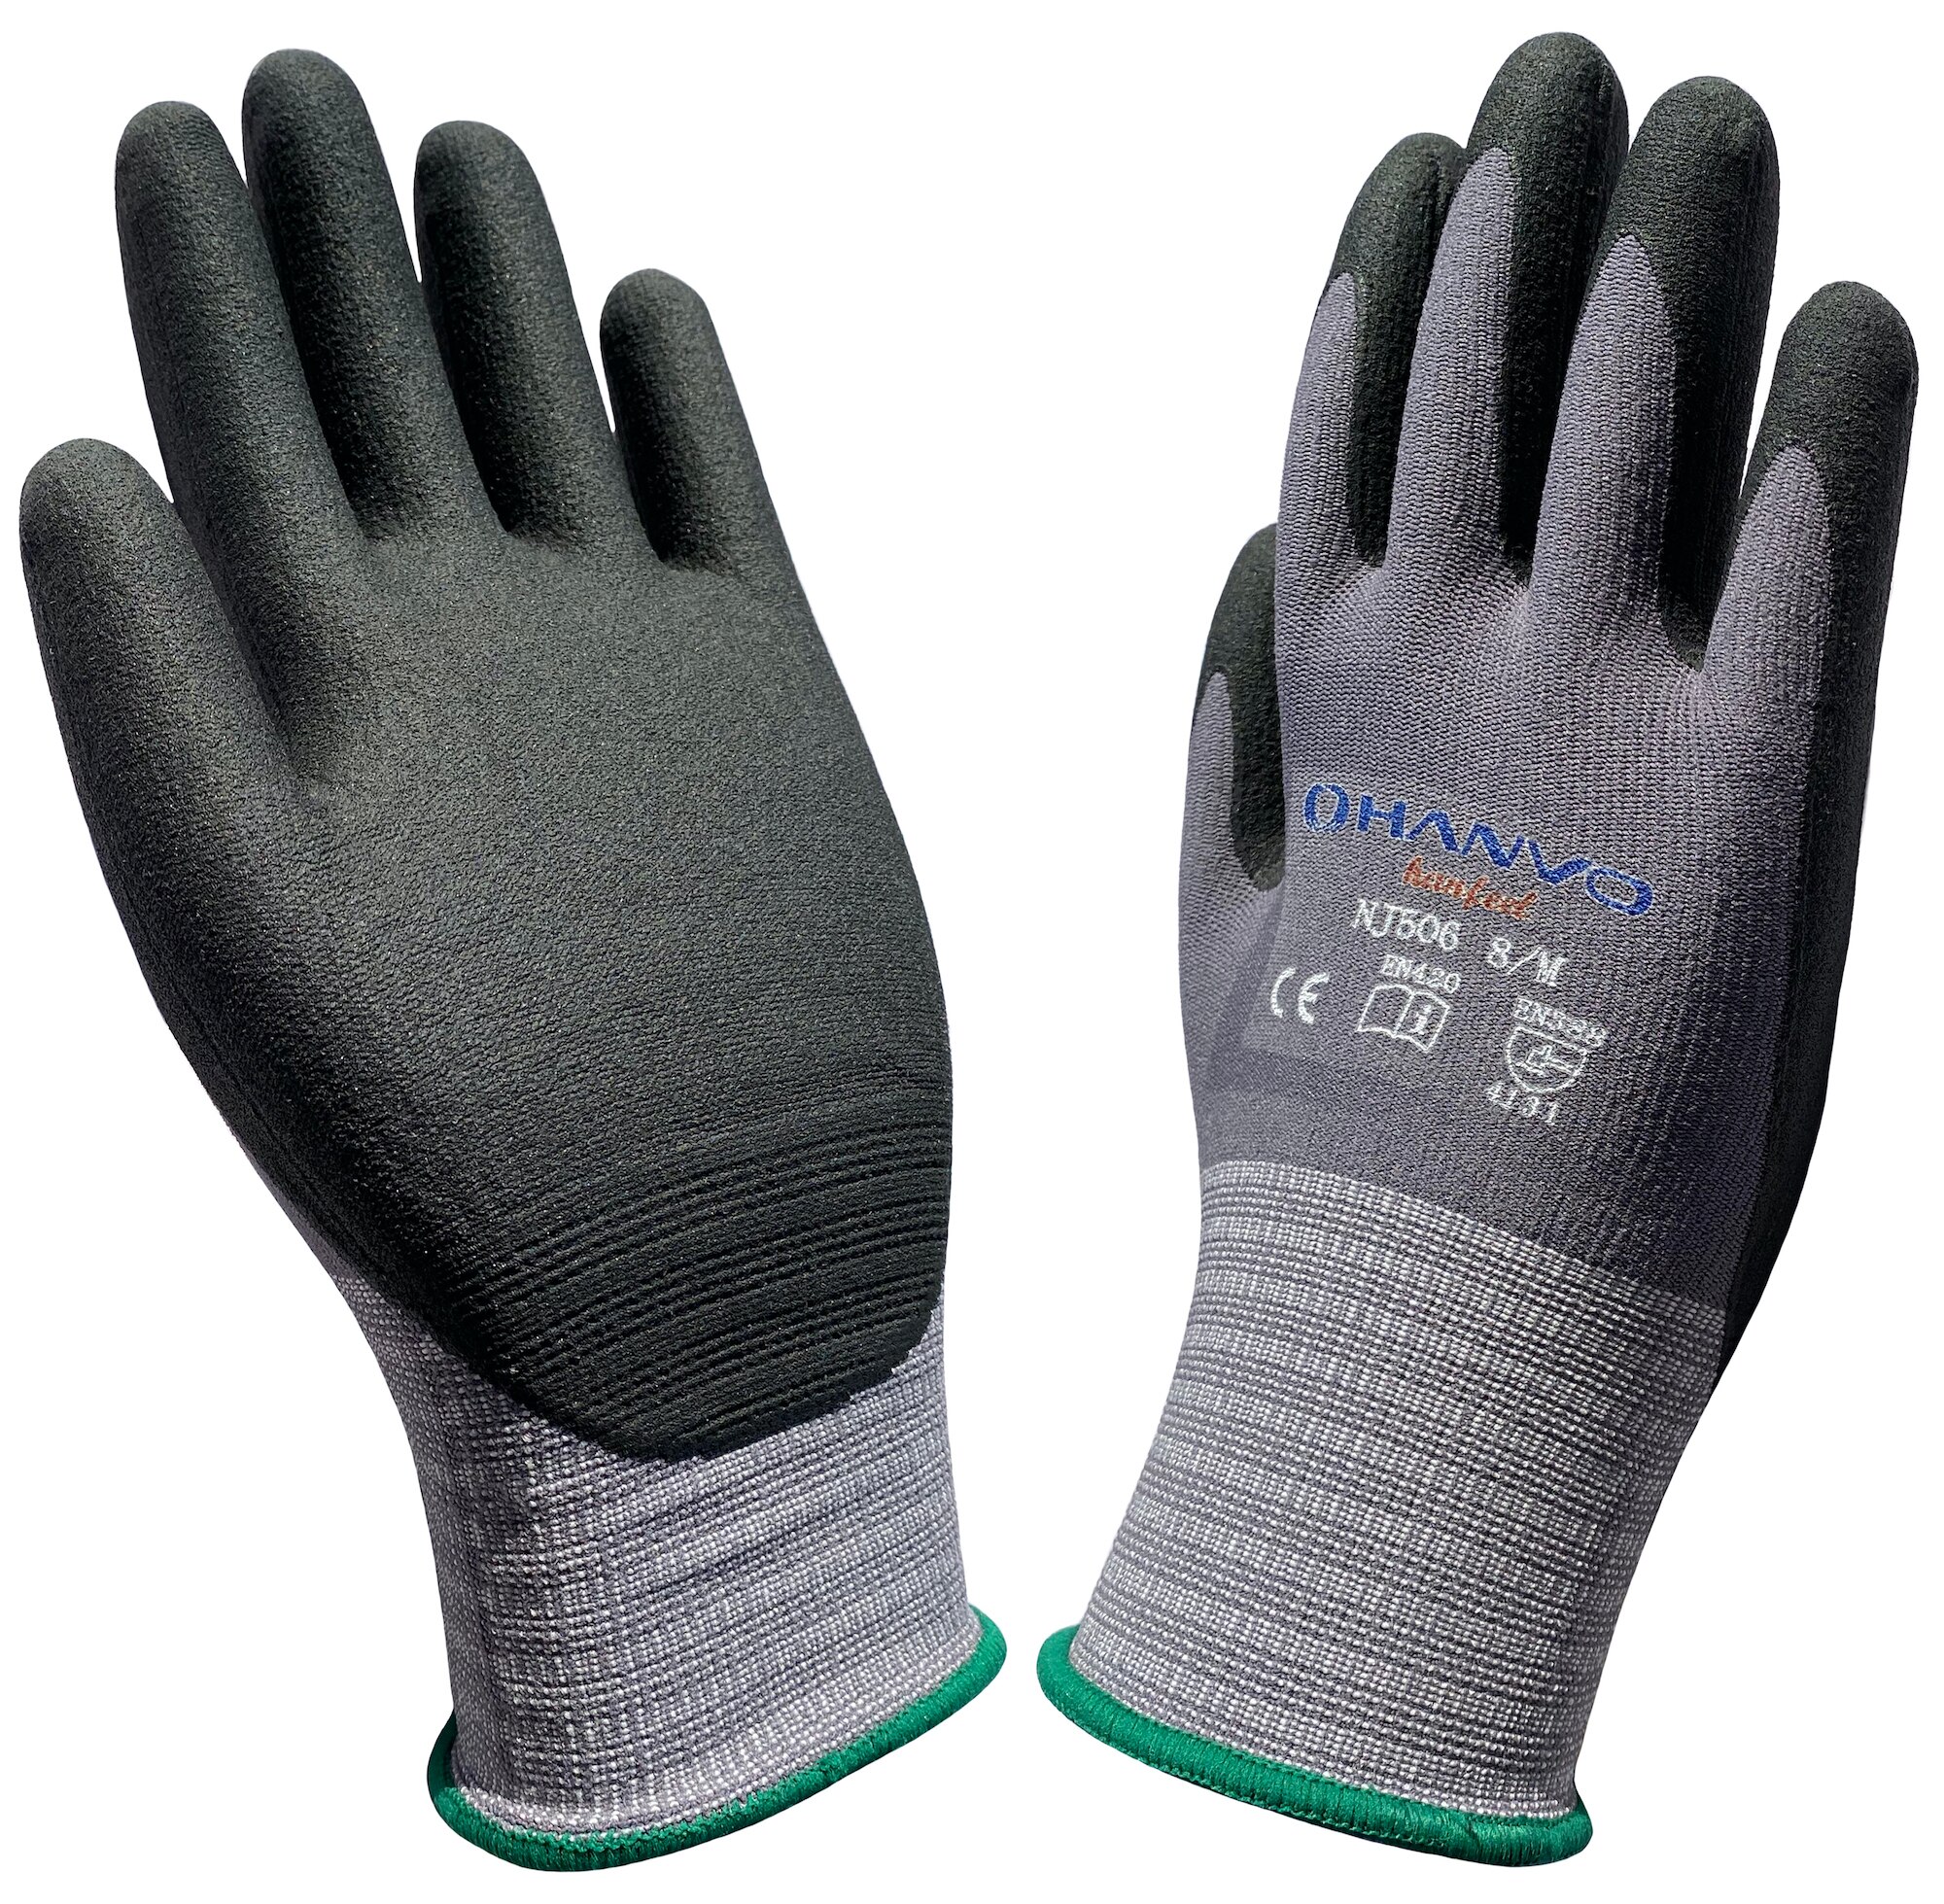 Oil And Gas NJ506 High Flex Safety Nitrile Foam Maxi Abrasion Resistant Gardening Work Gloves